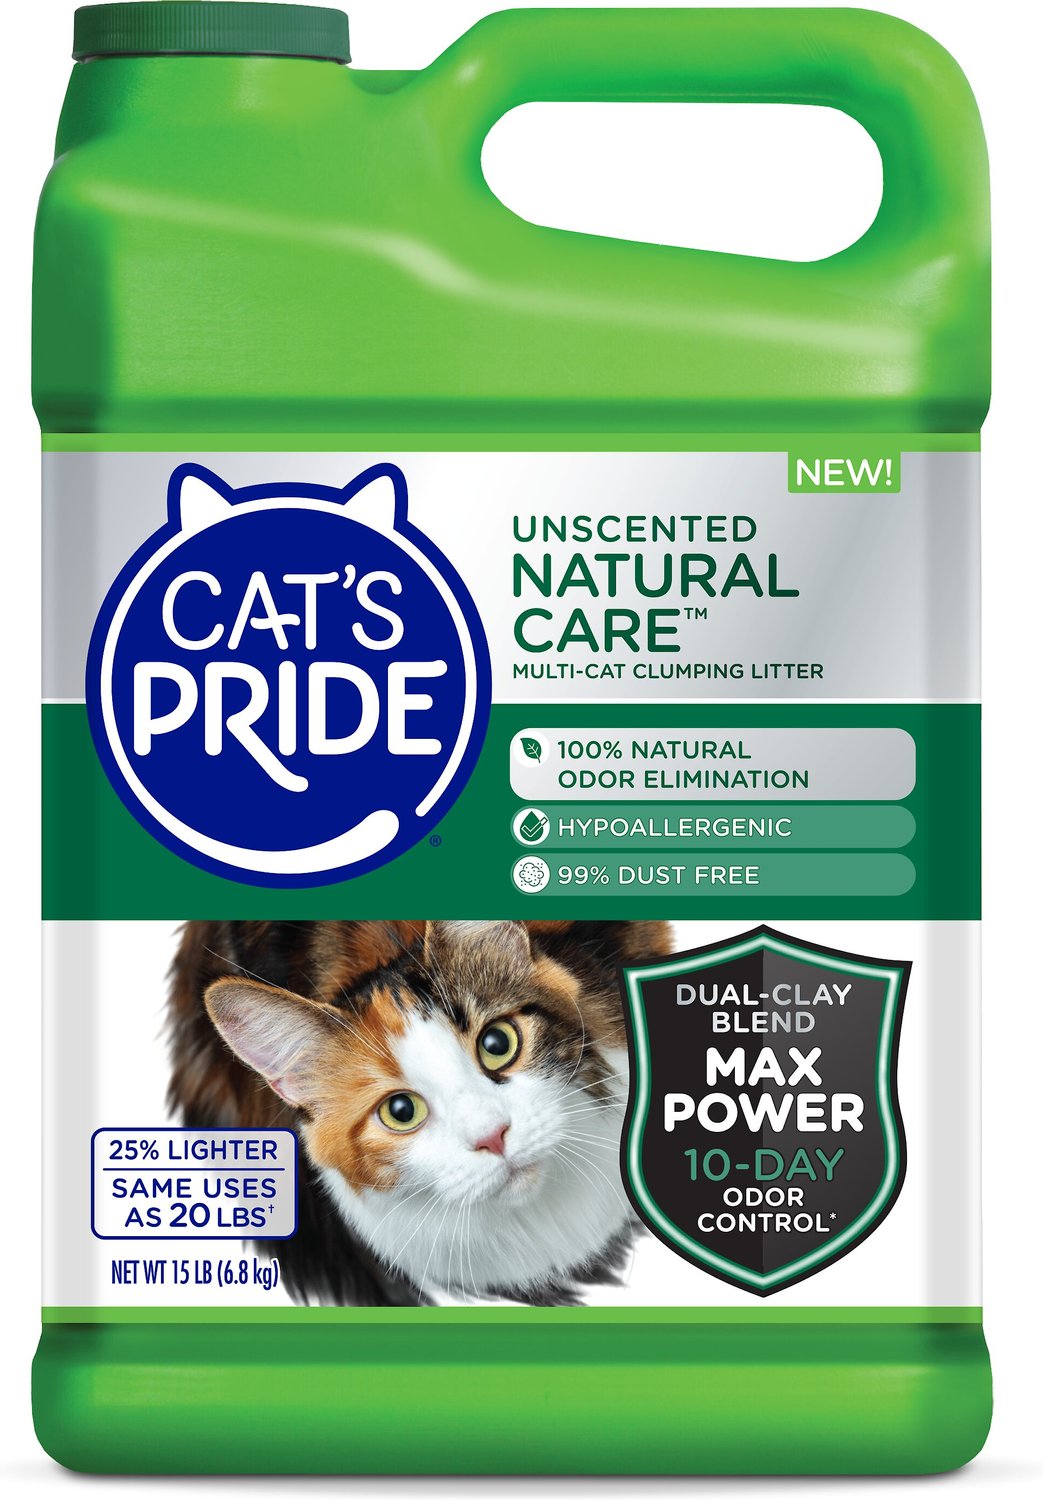 CAT'S PRIDE Natural Care Unscented Clumping Cat Litter, 15lb jug